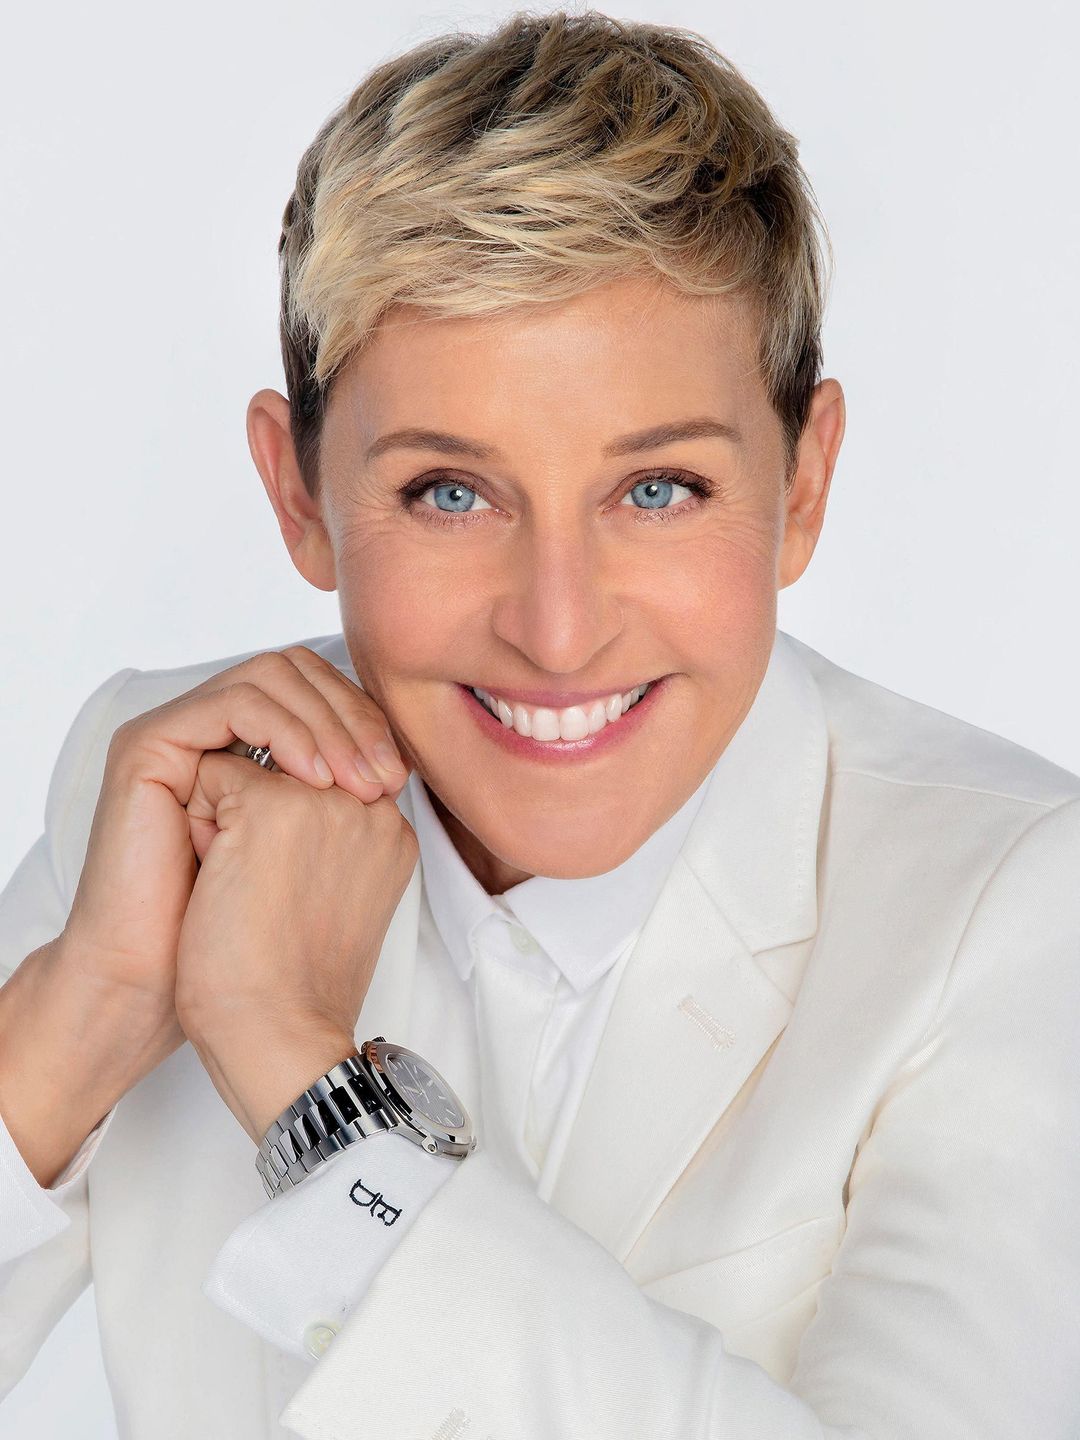 Ellen DeGeneres education